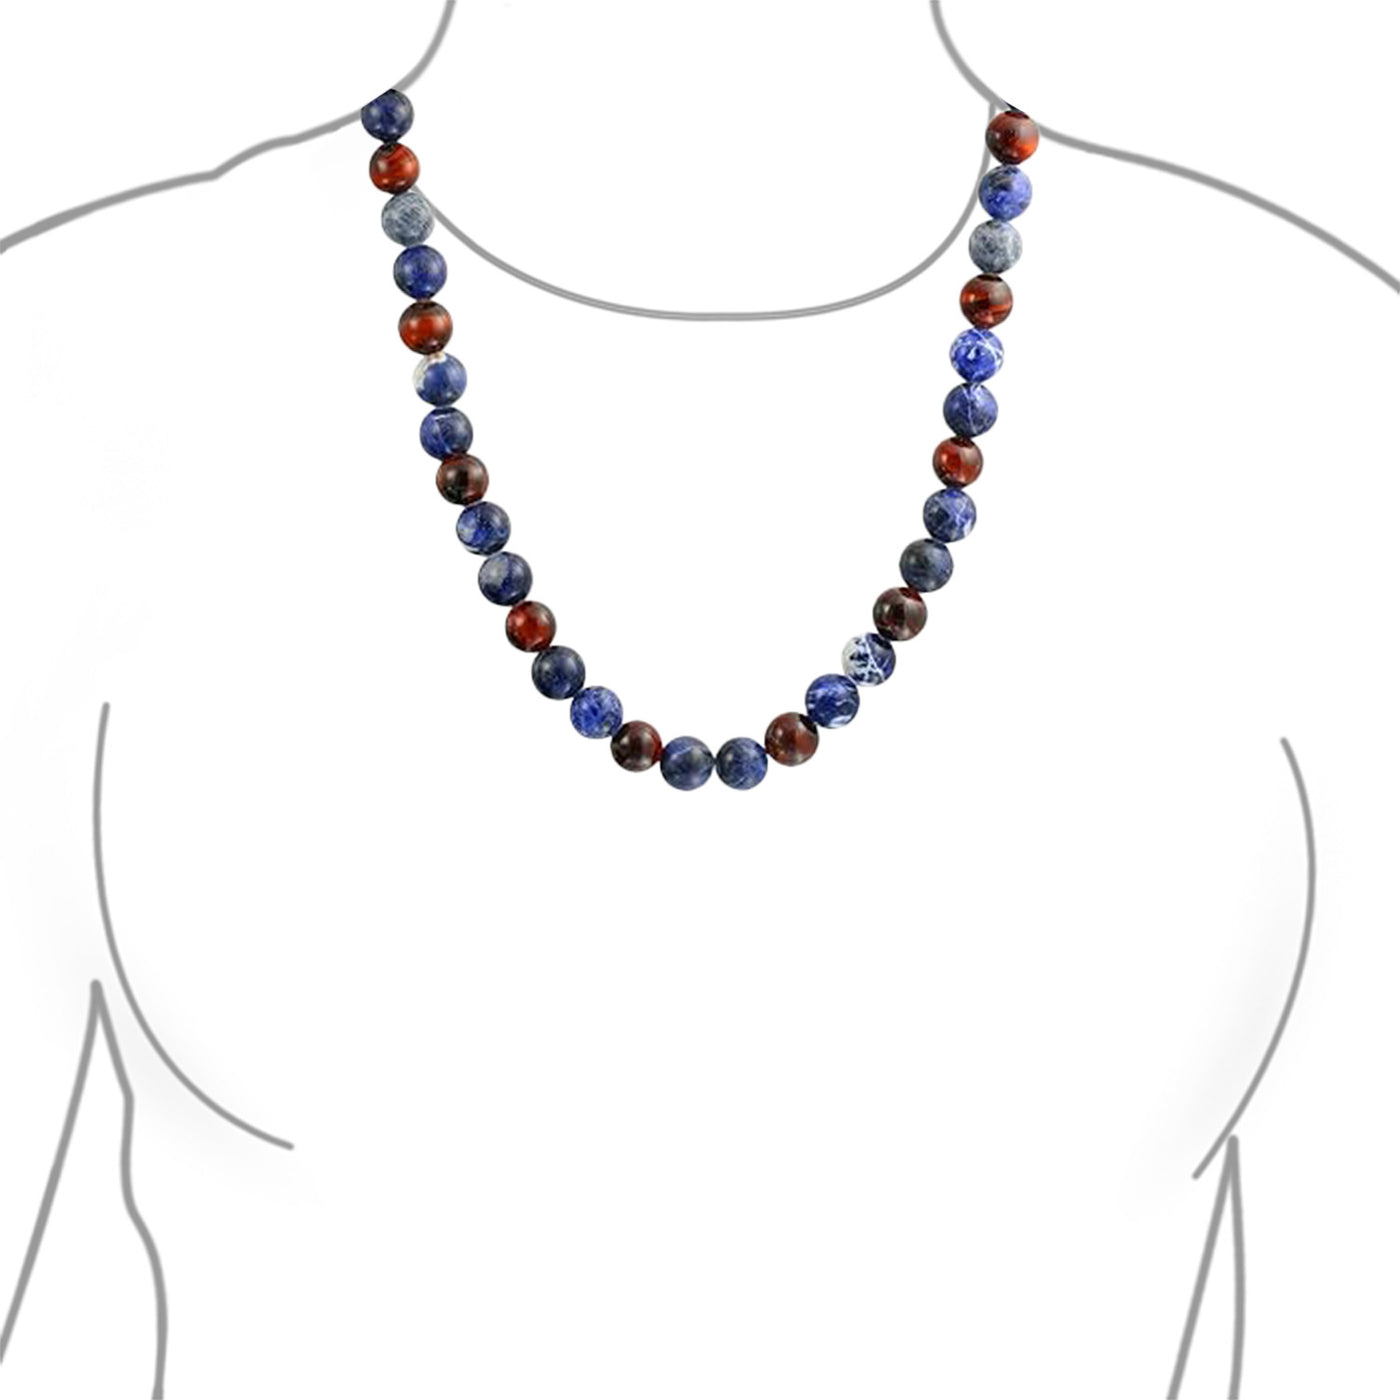 Bali Style Gemstone Blue Sodalite Tiger Eye Ball Bead Strand Necklace